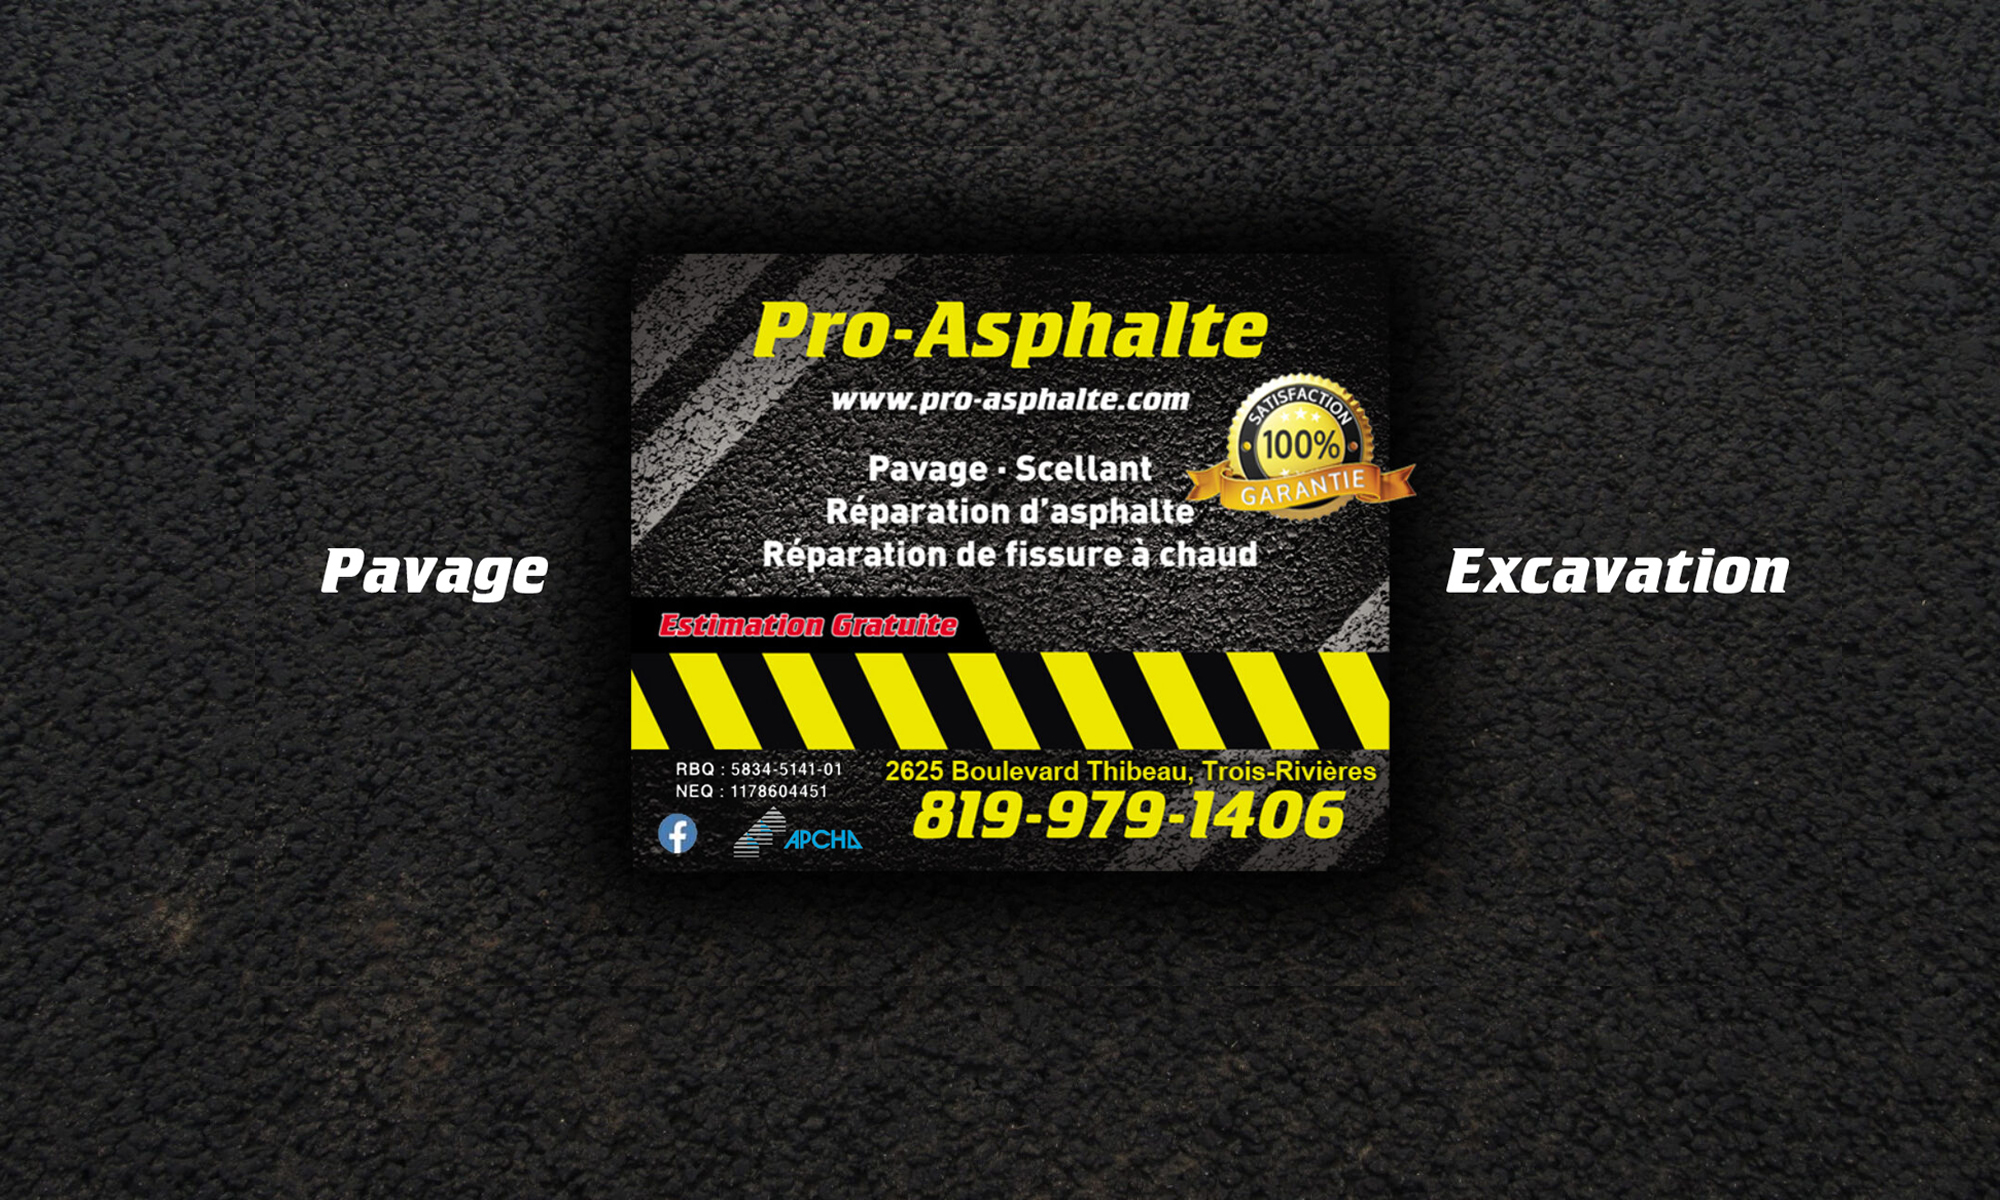 Pro-asphalte